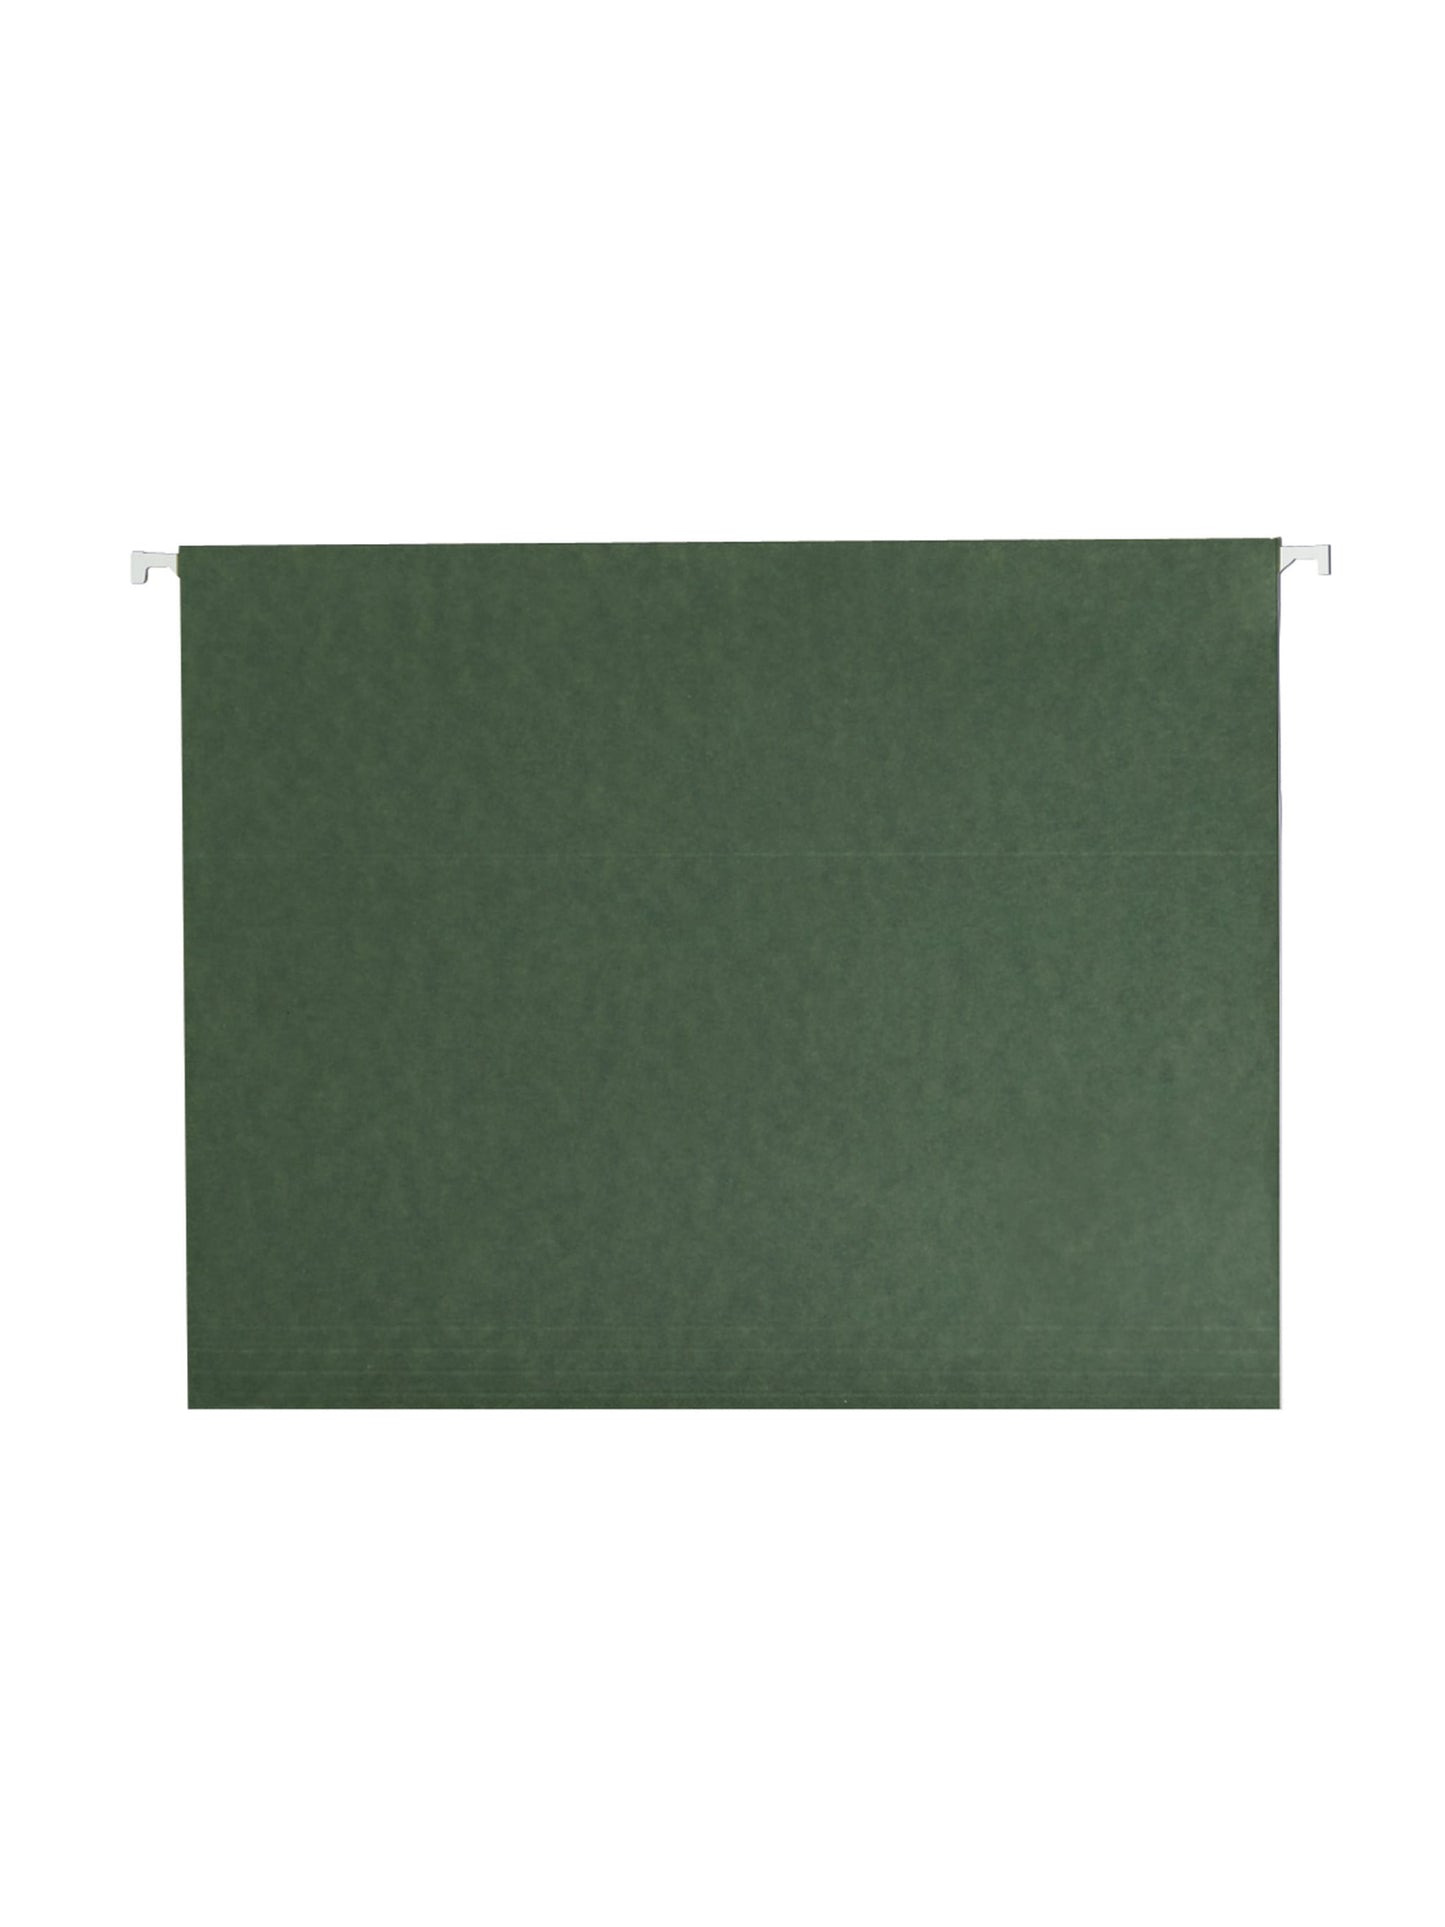 Standard Hanging File Folders, Without Tabs, Standard Green Color, Letter Size, Set of 25, 086486640107